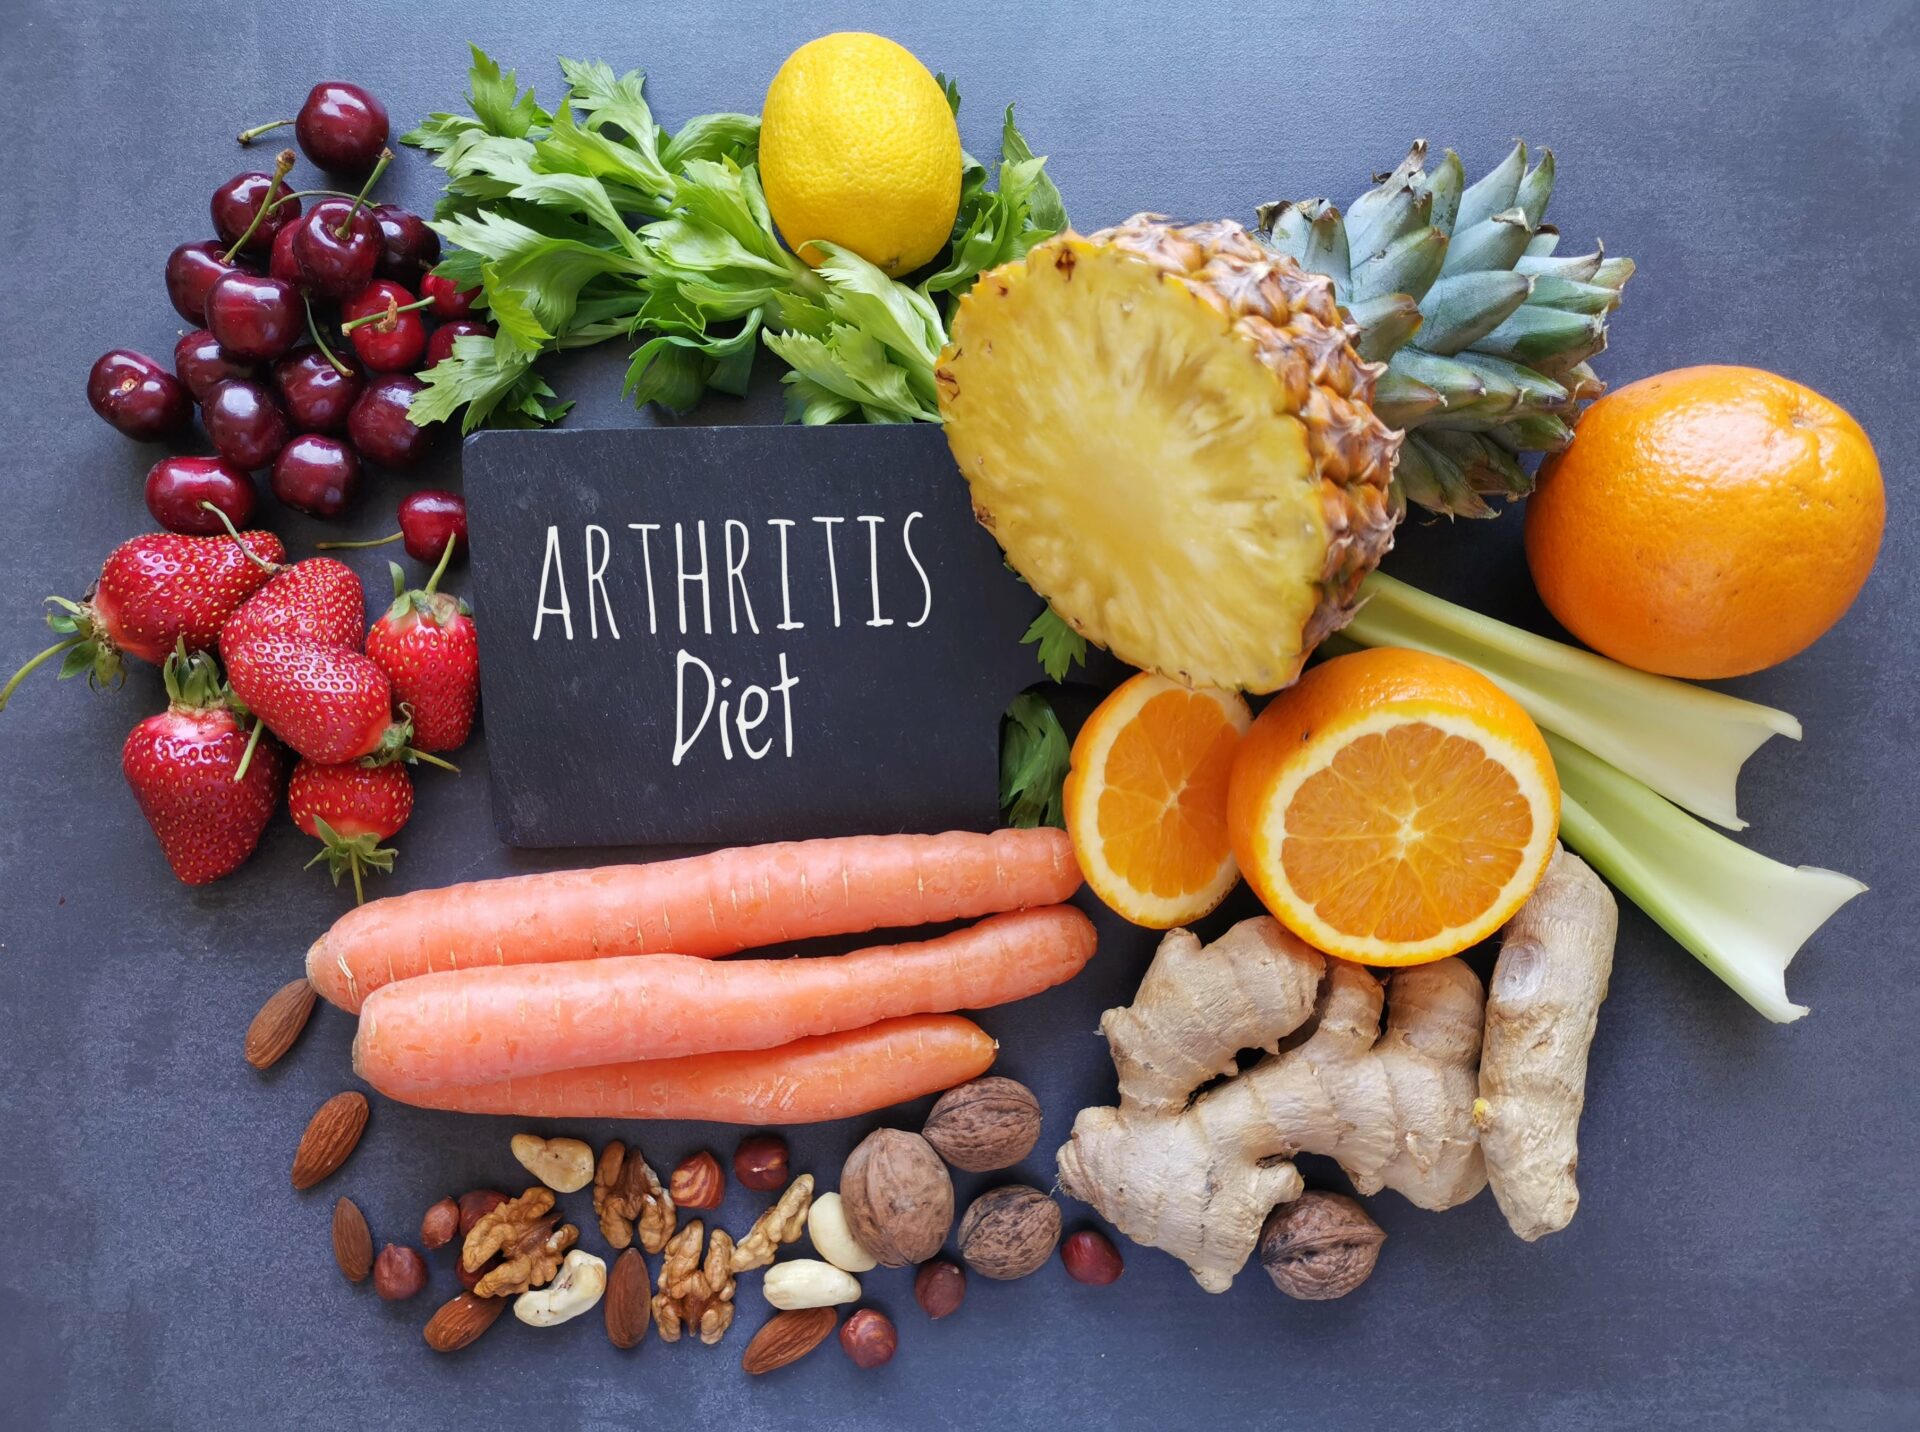 Arthritis diet graphic - Ladan Hajipour